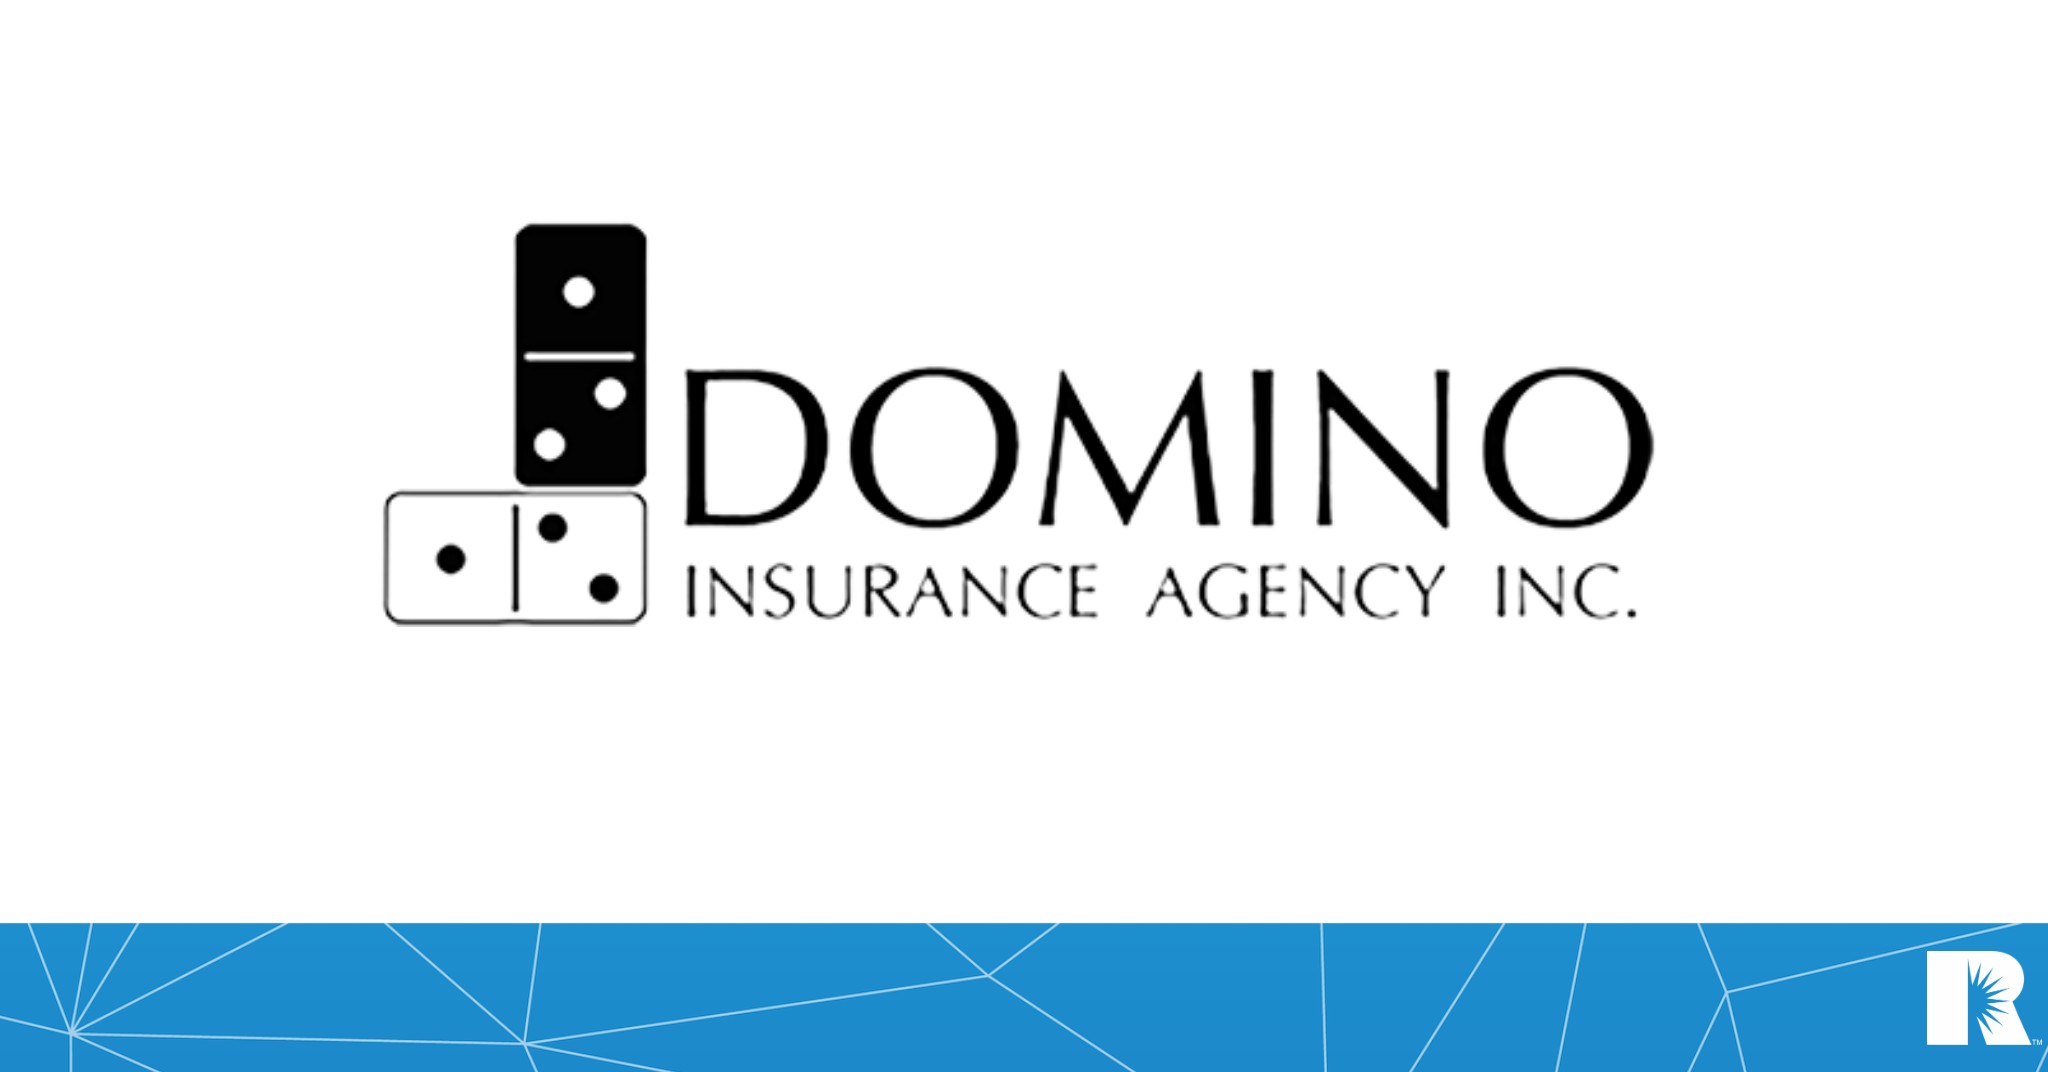 The Domino Insurance Agency's business logo.